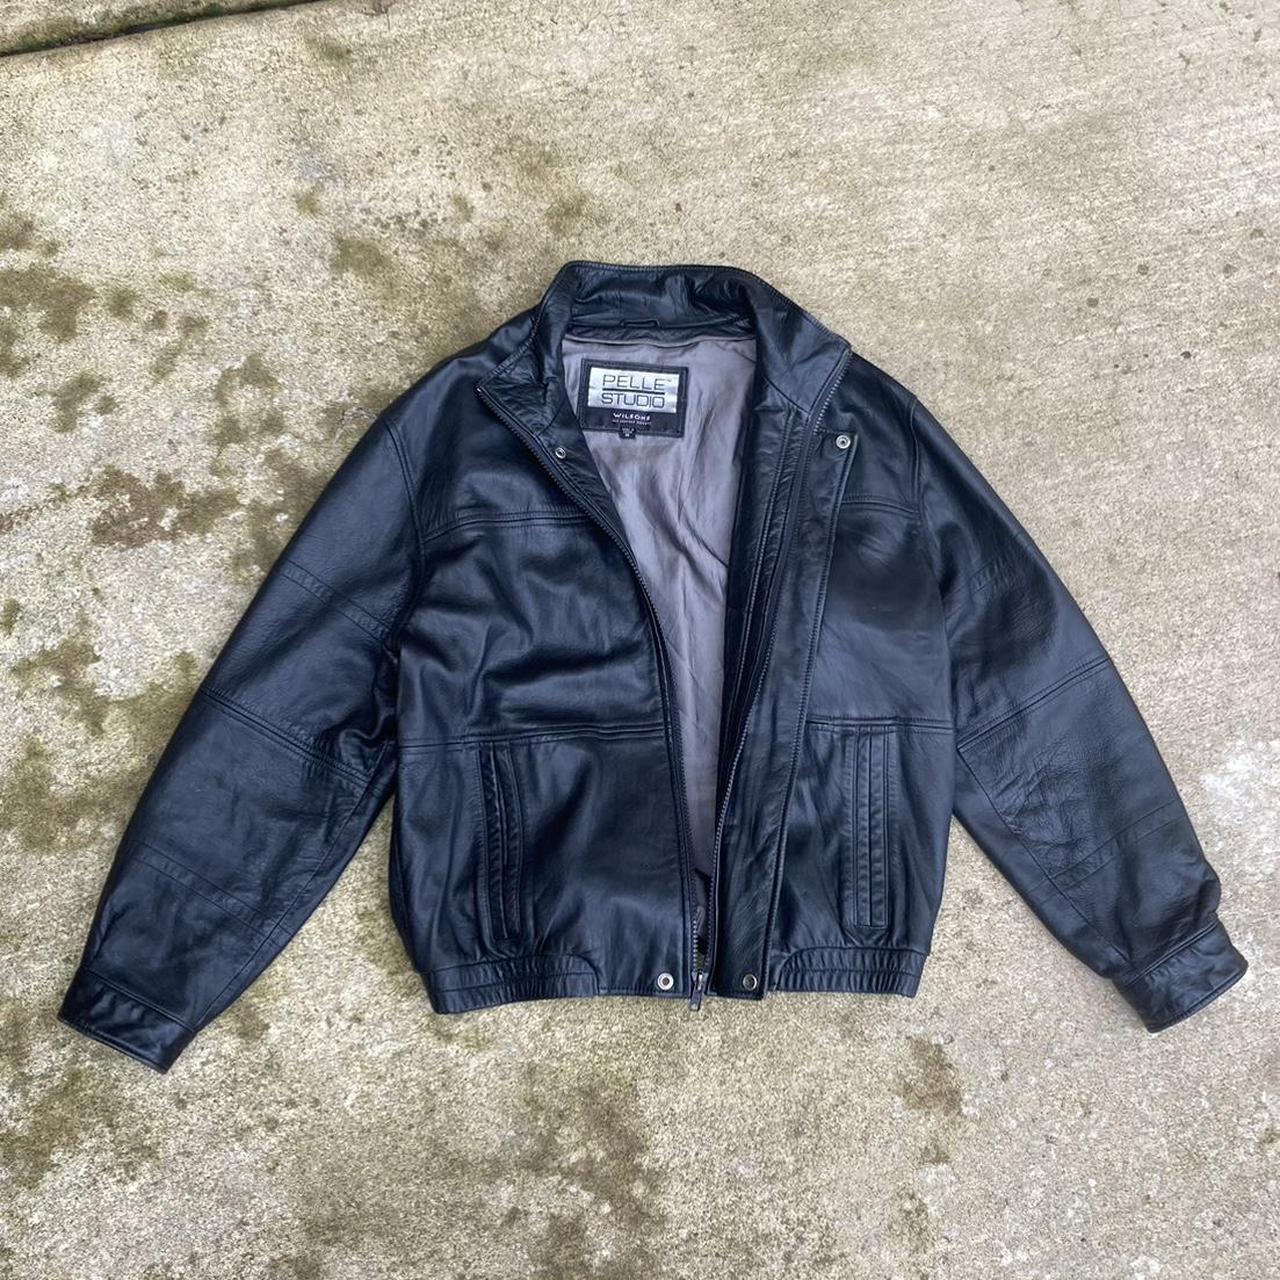 Pelle studios leather jacket Good conditionc, some... - Depop